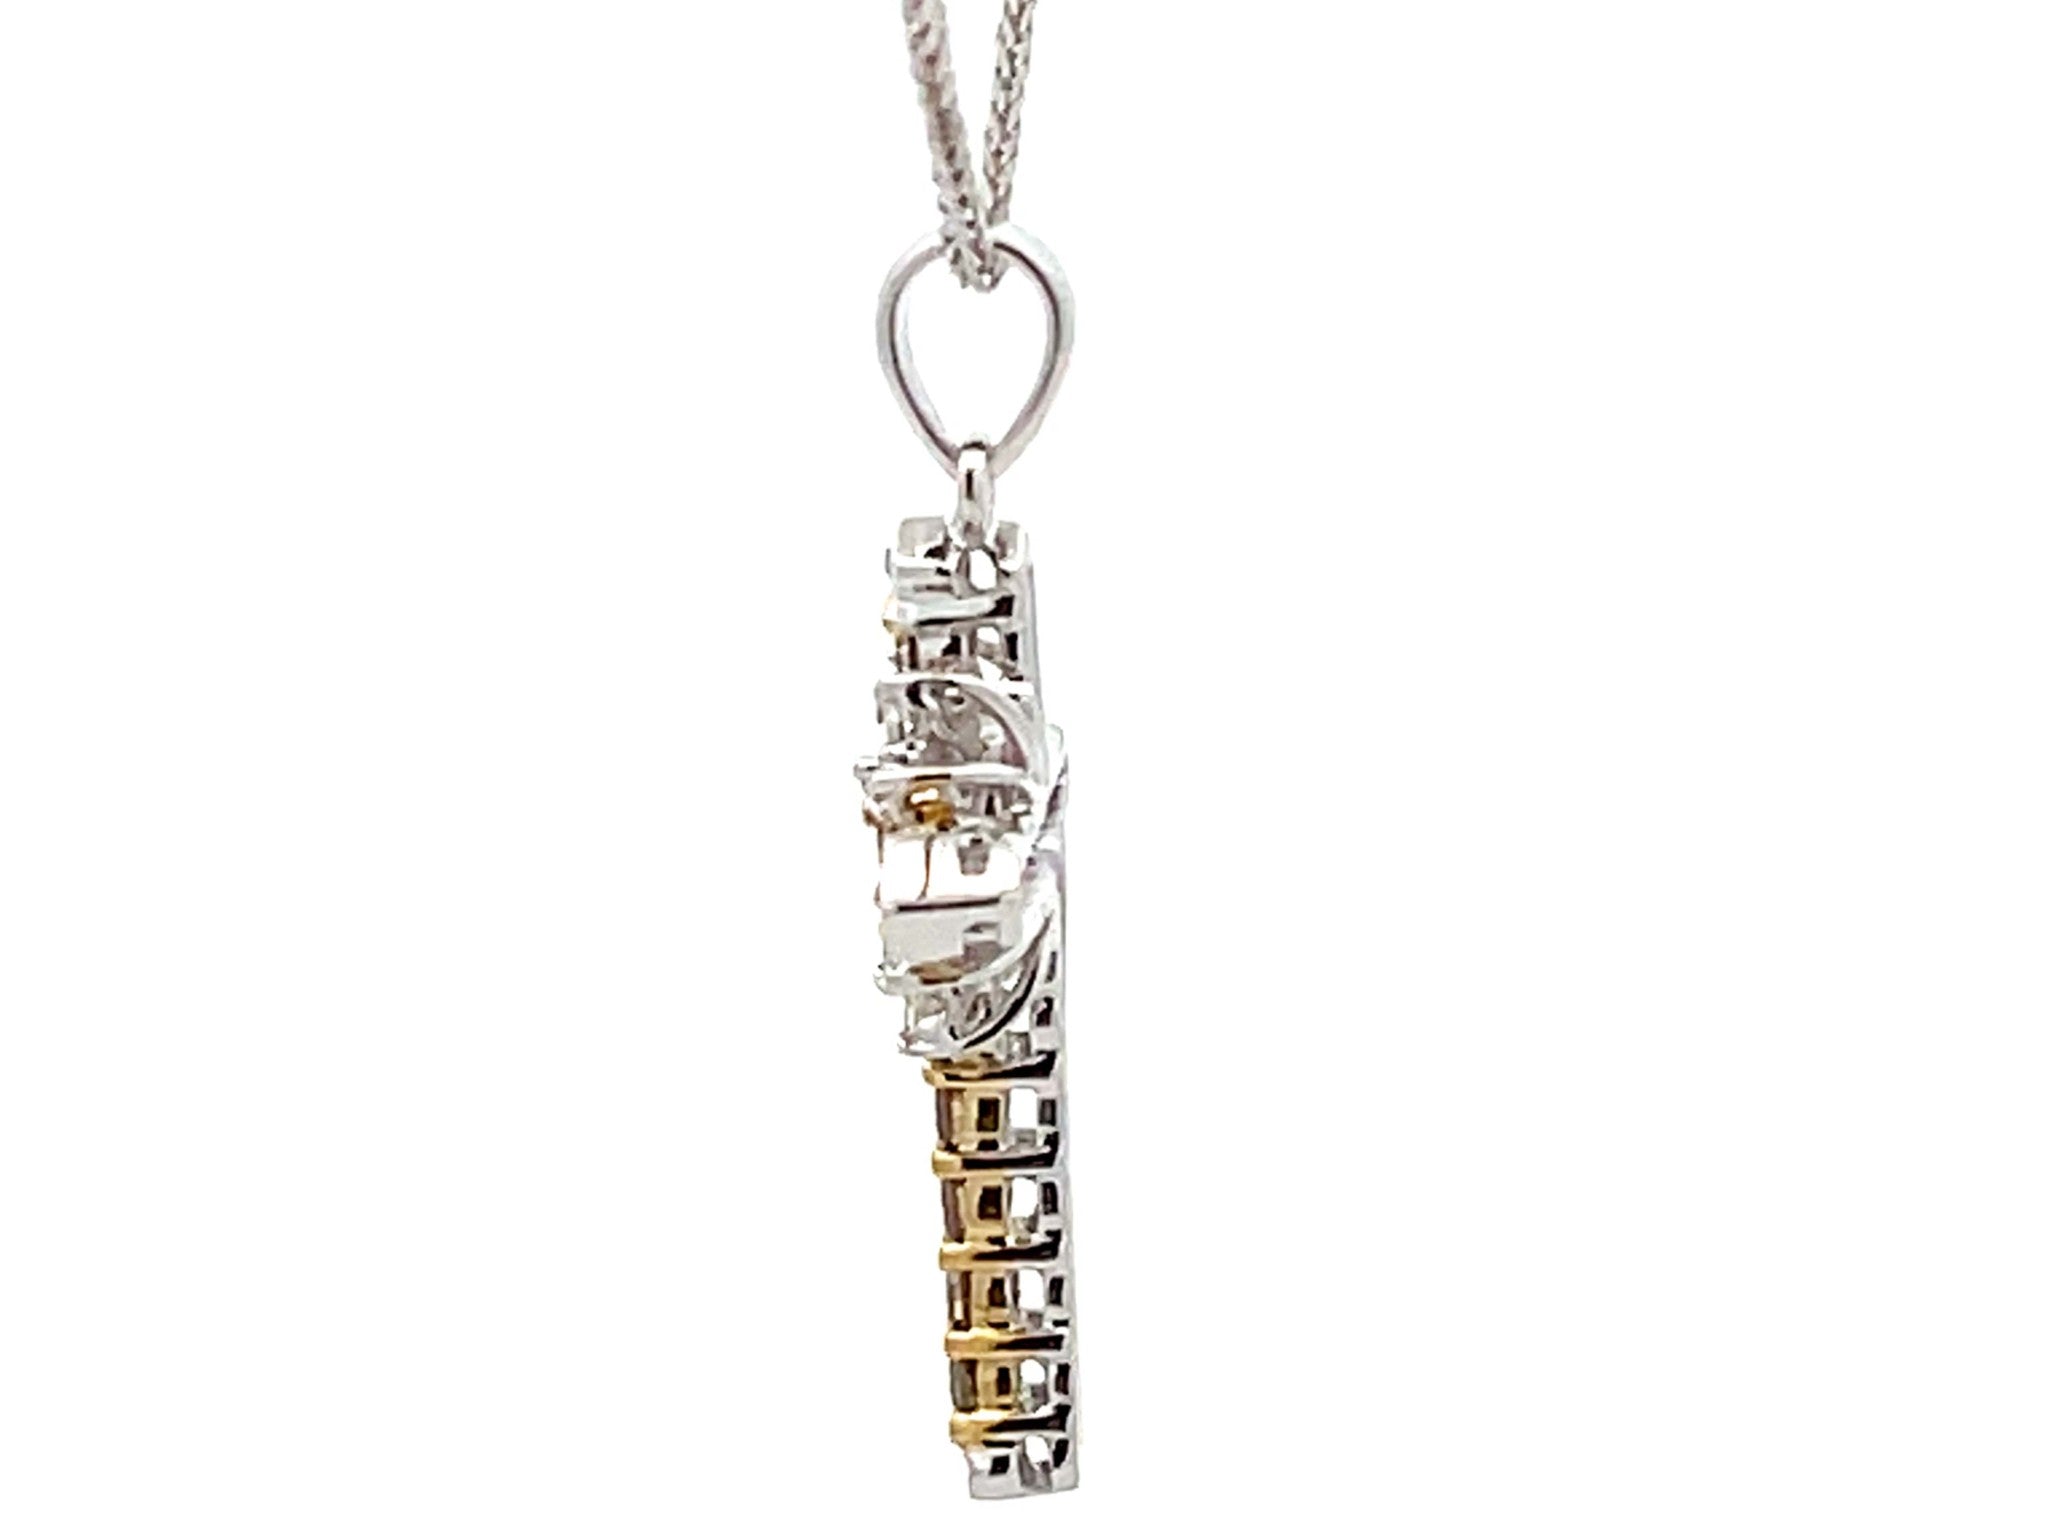 Champagne Diamond Cross Necklace 14k White Gold